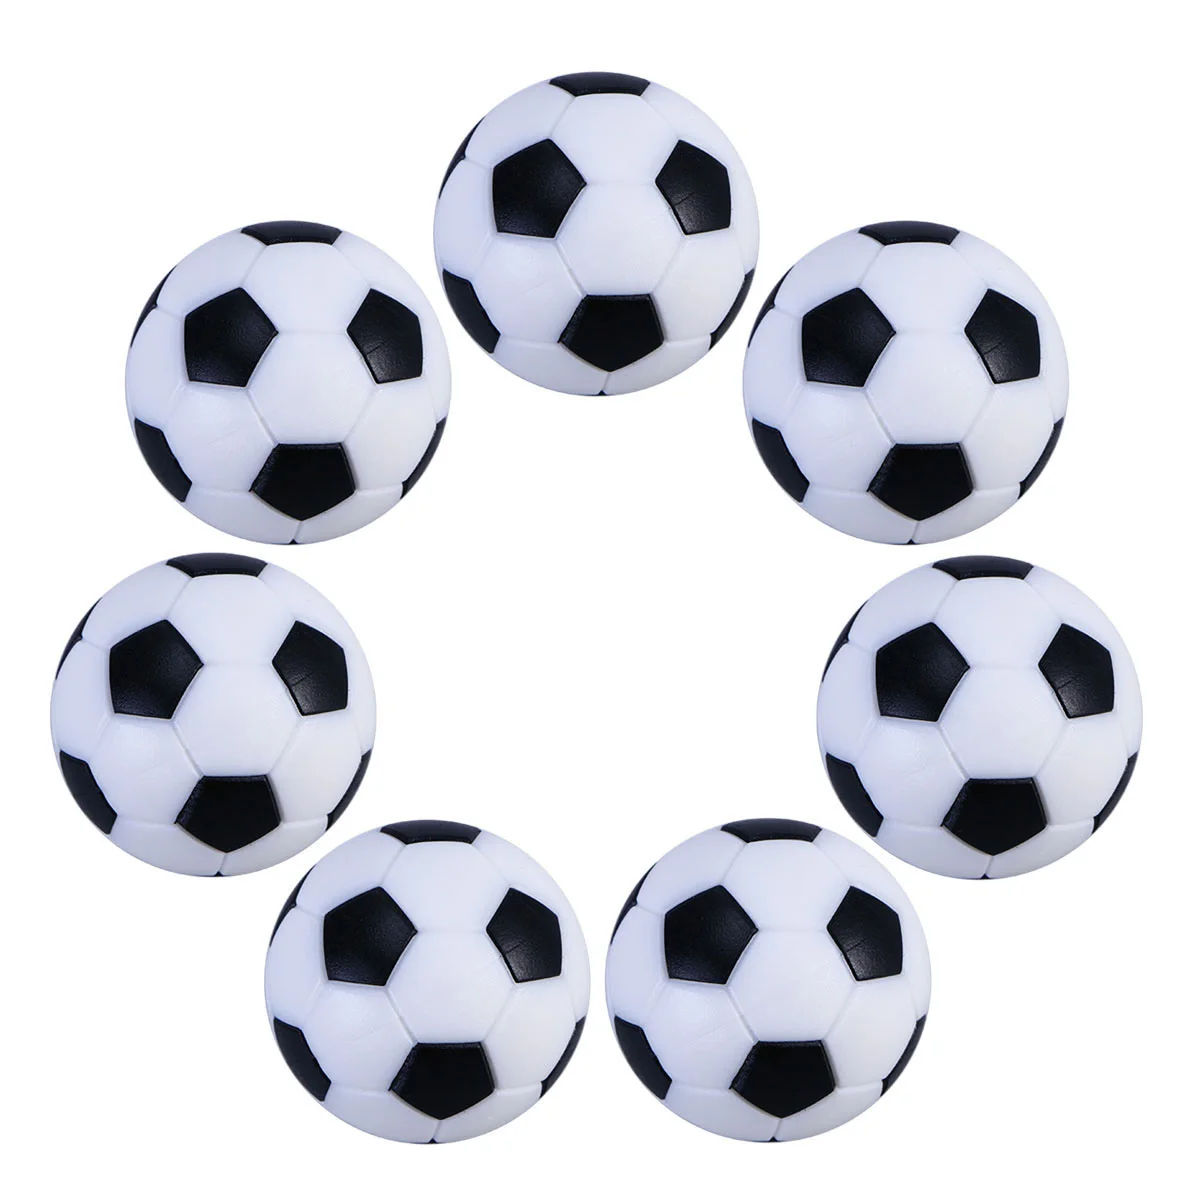 

6PCS 32mm Foosball Table Soccer Foosballs Black and White Soccer Balls for Amusement